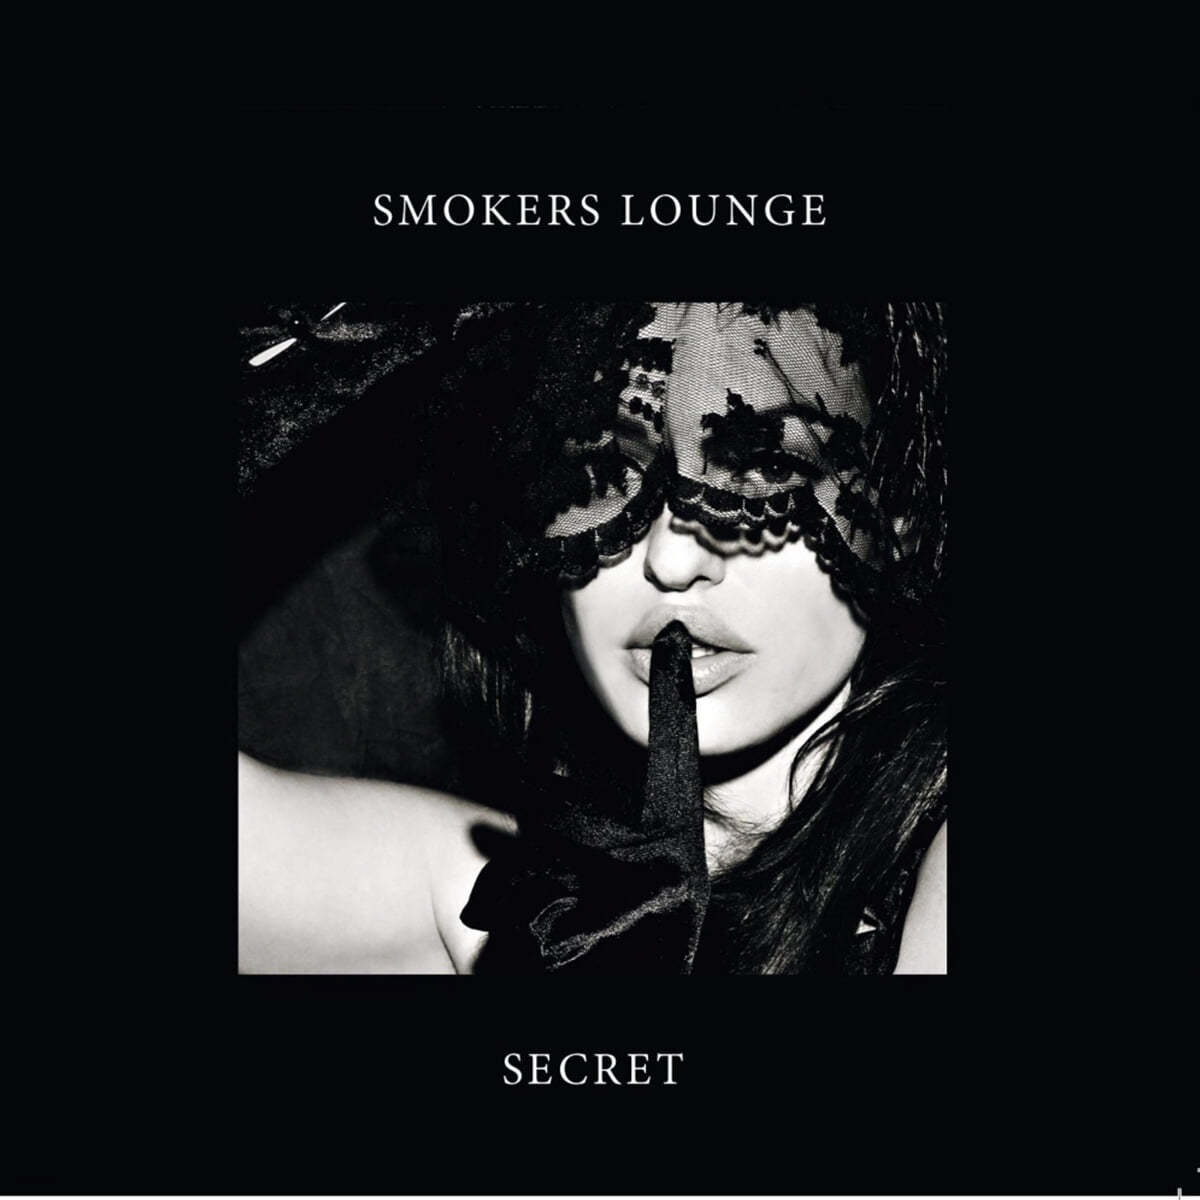 Smokers Lounge (스모커스 라운지) - Secret (ft. Jens Haack & Mikkel Nordsø & Ben Besiakov)